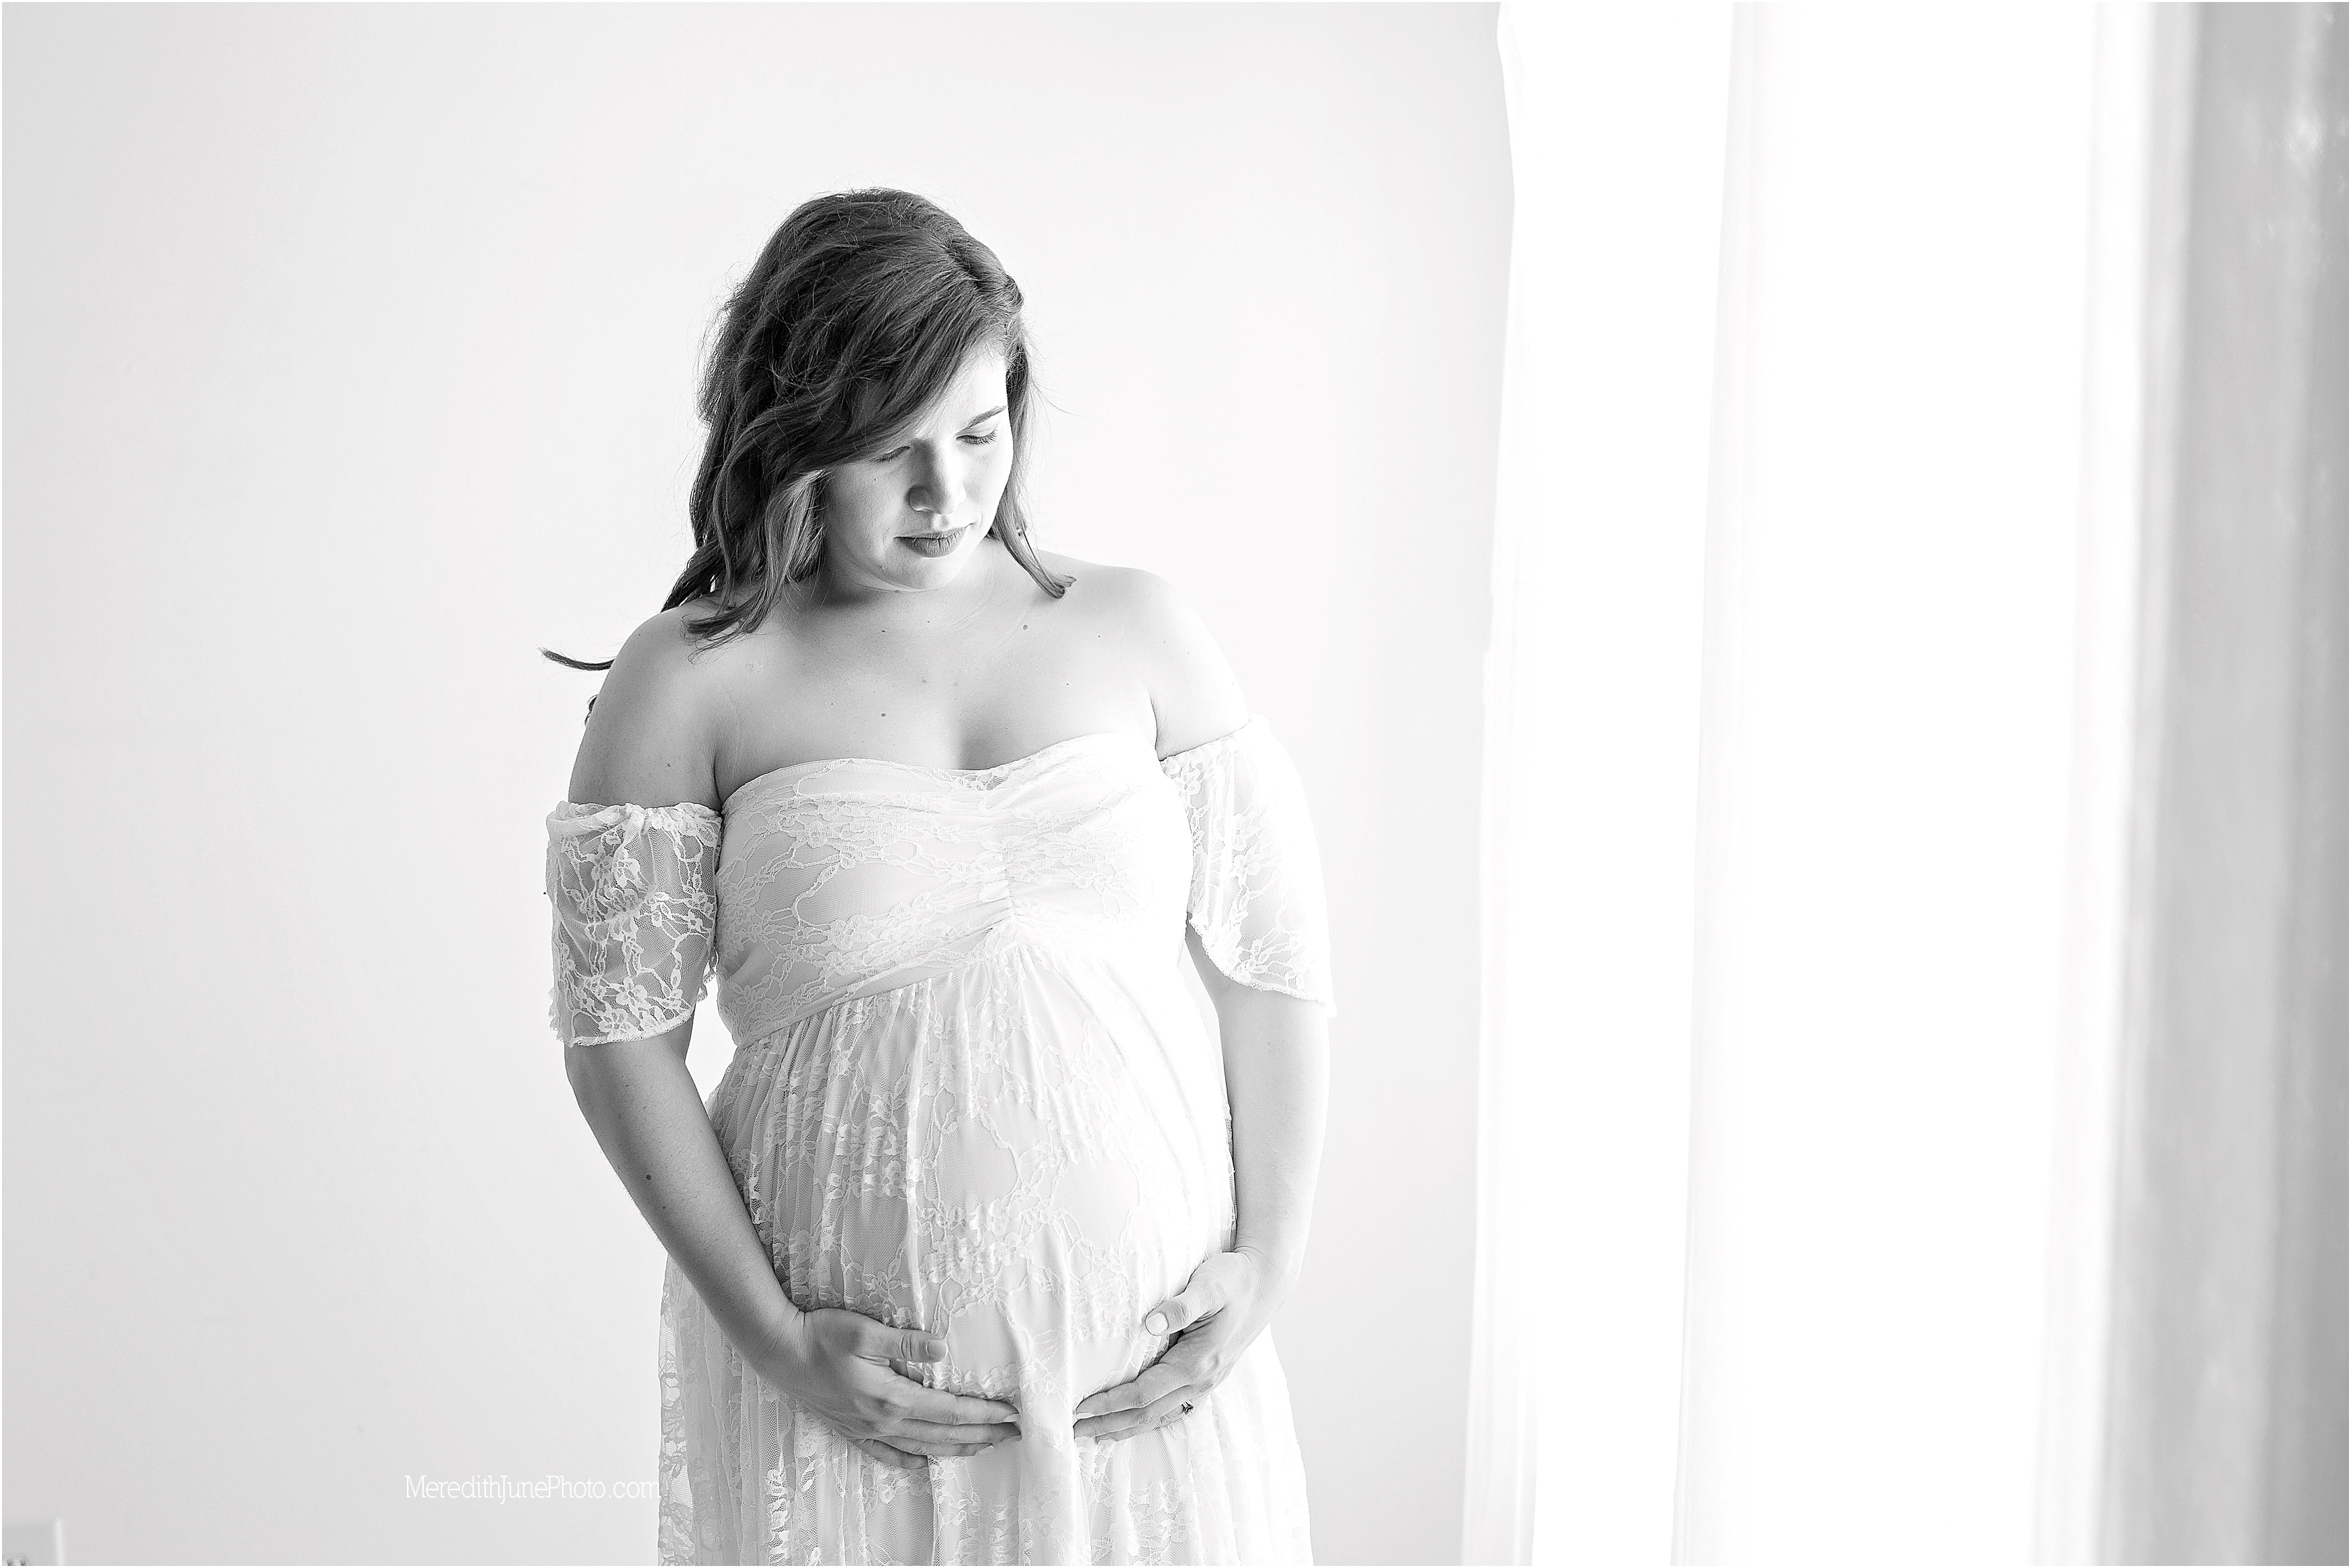 All white maternity mini photo session in Charlotte NC